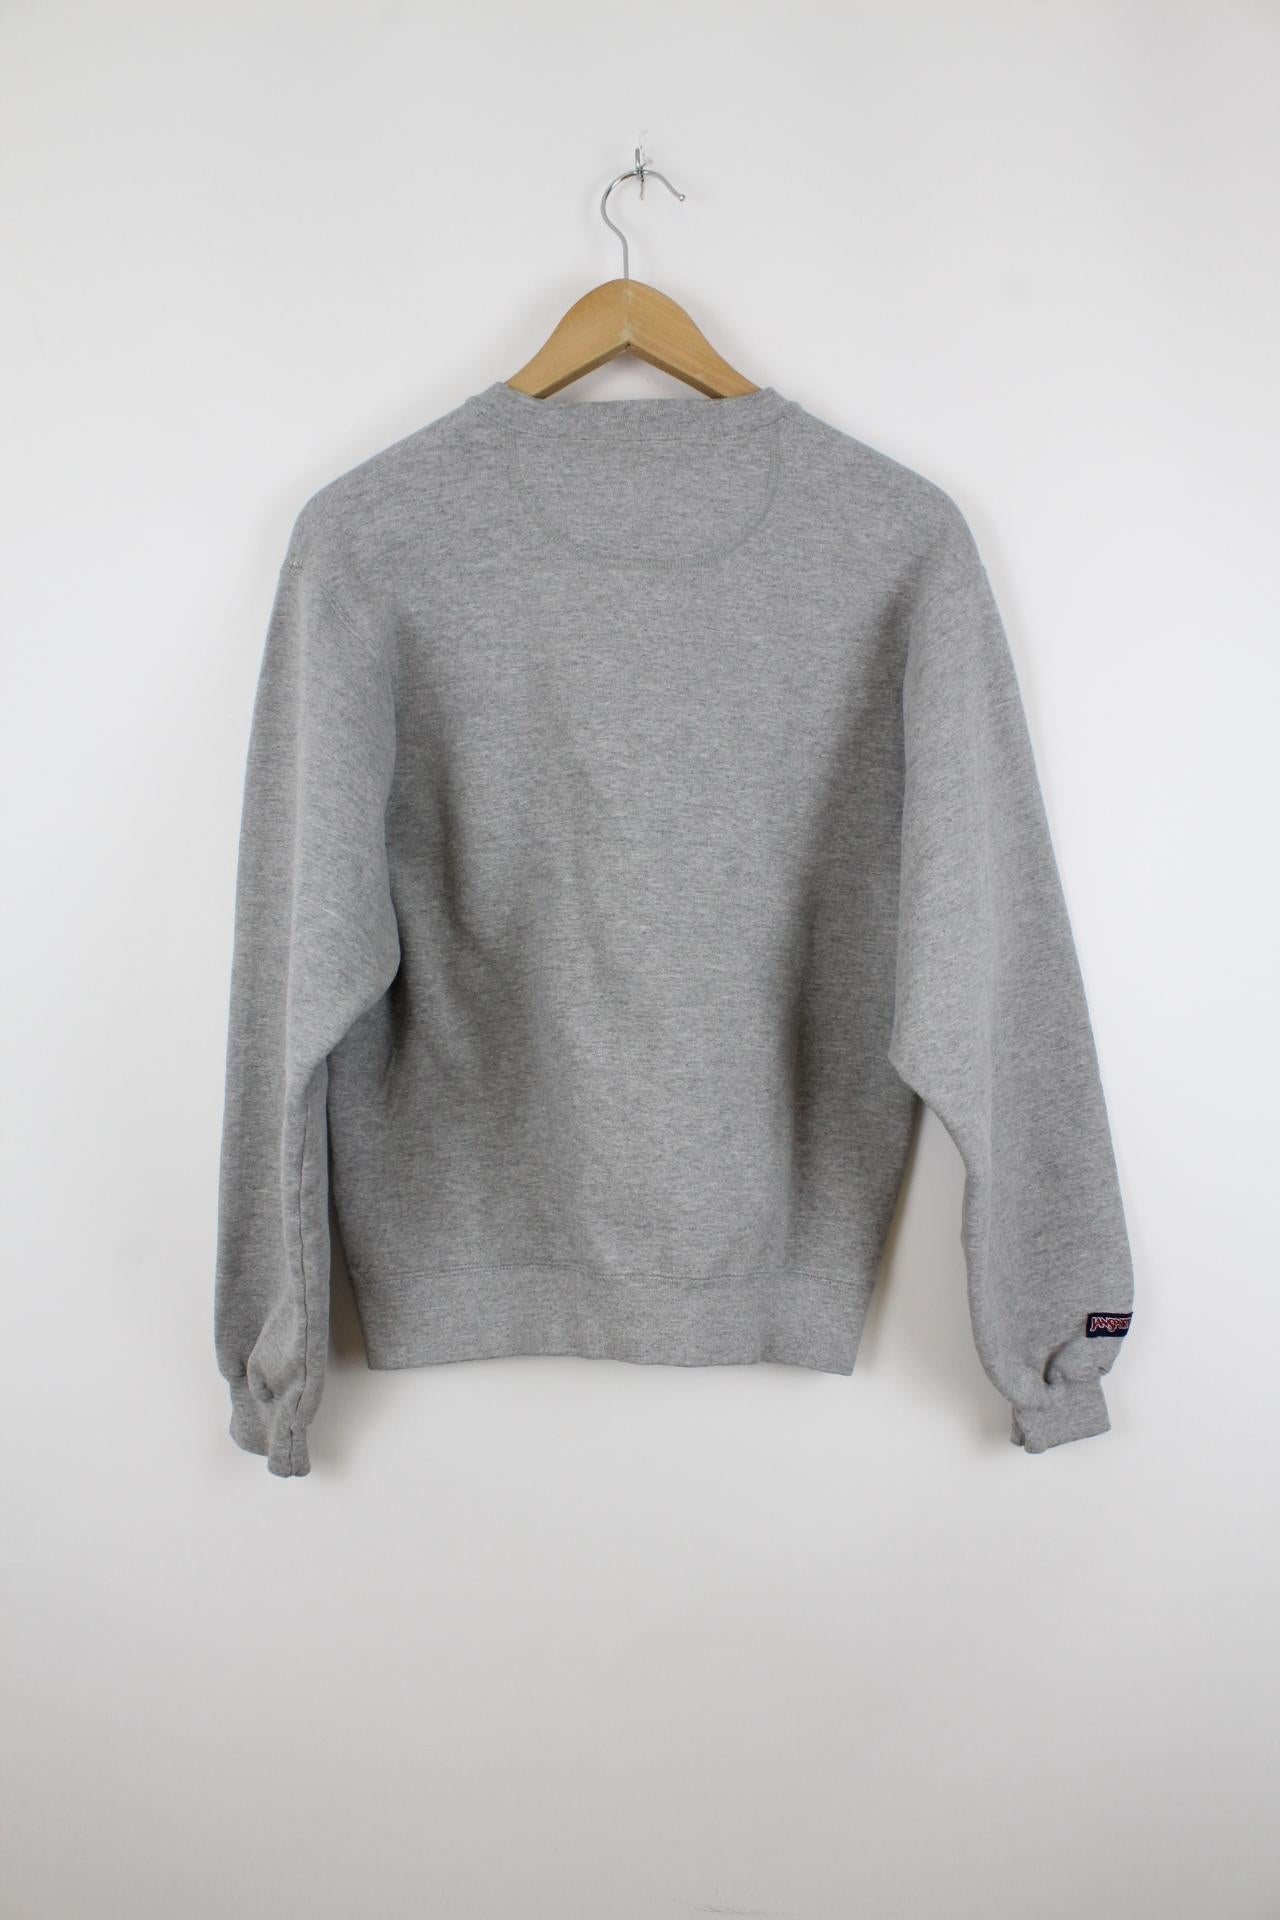 Vintage USA Sweater Grau - S